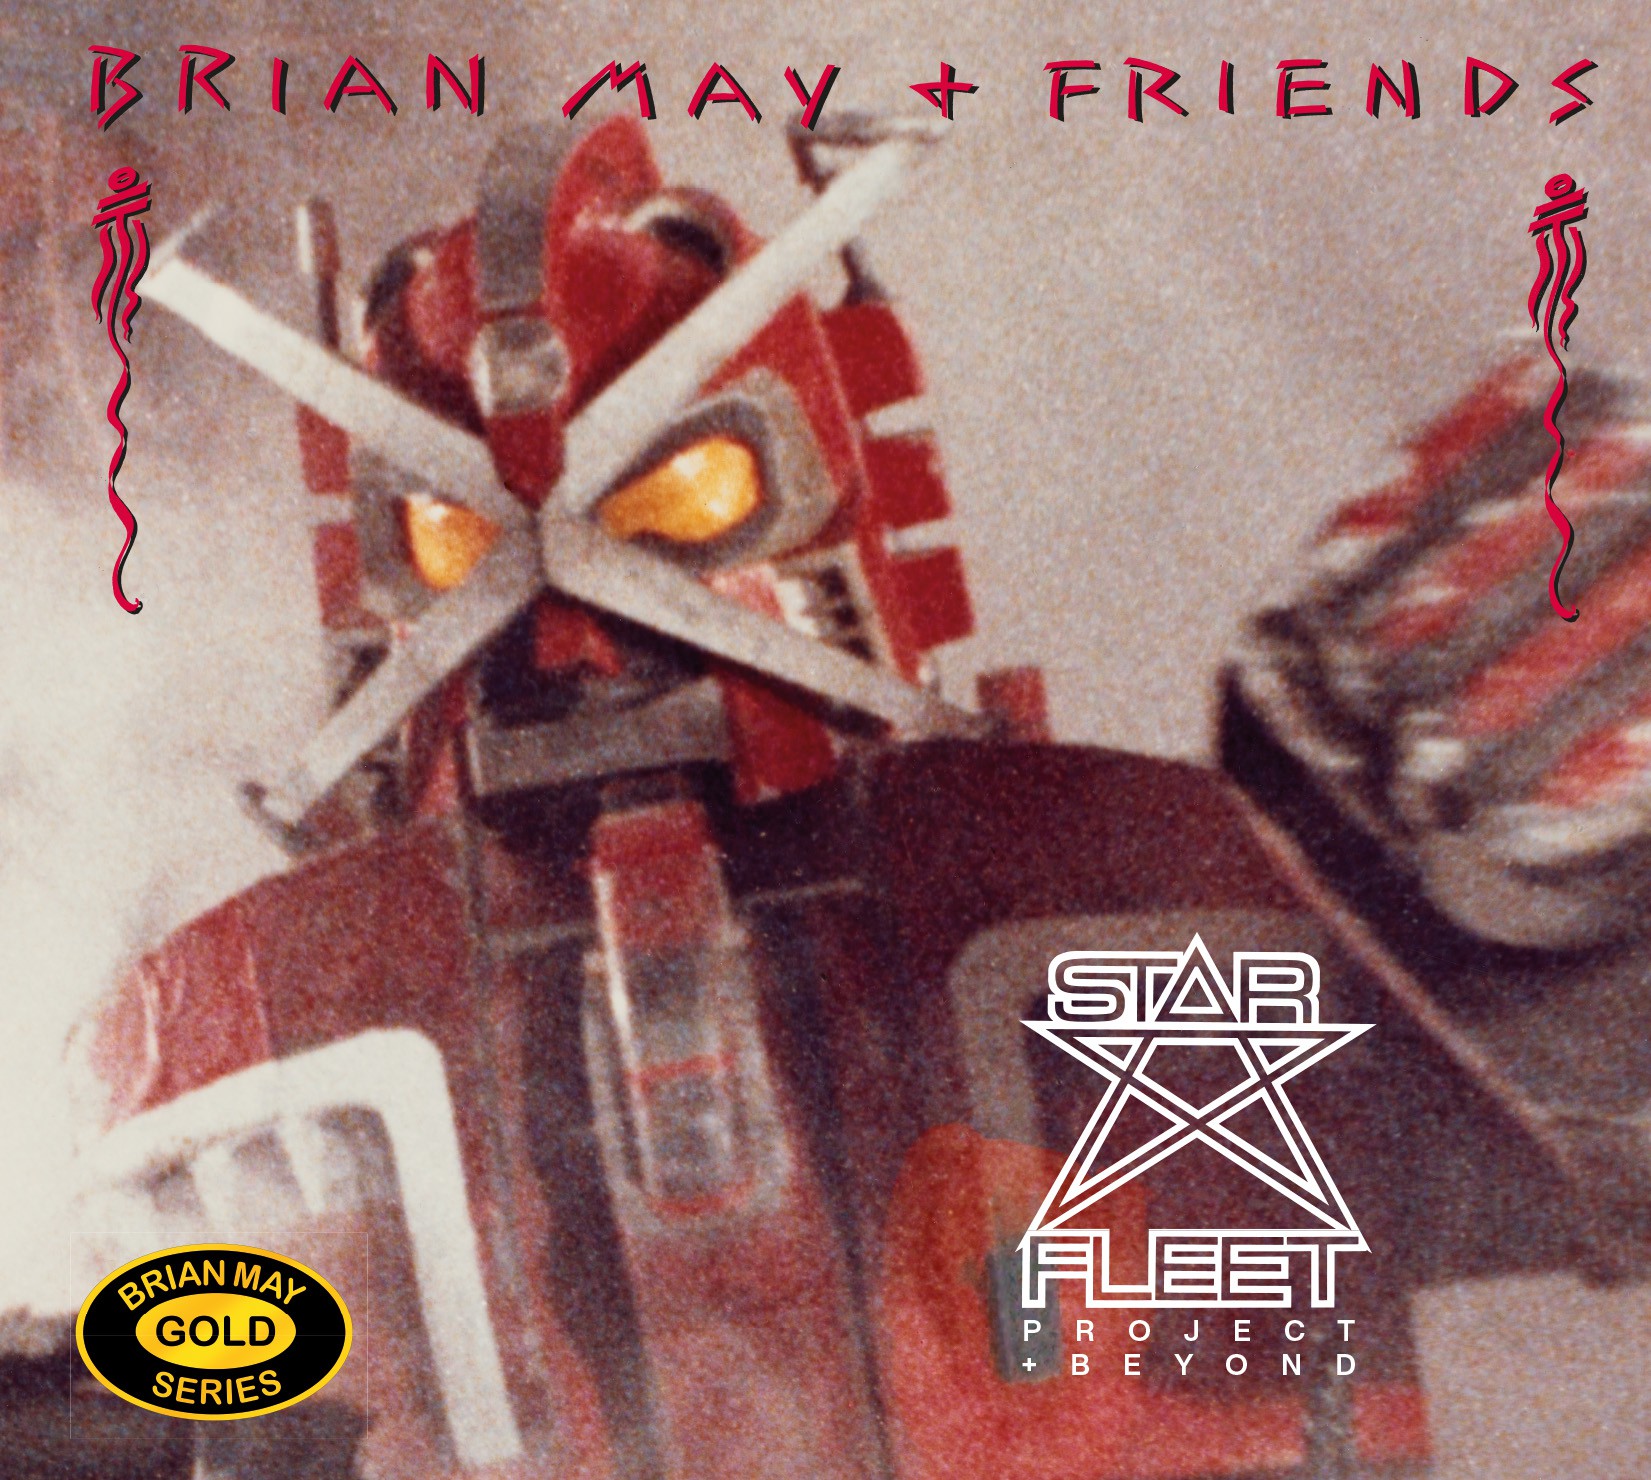 Brian May & Friends (UK) – Star Fleet Project